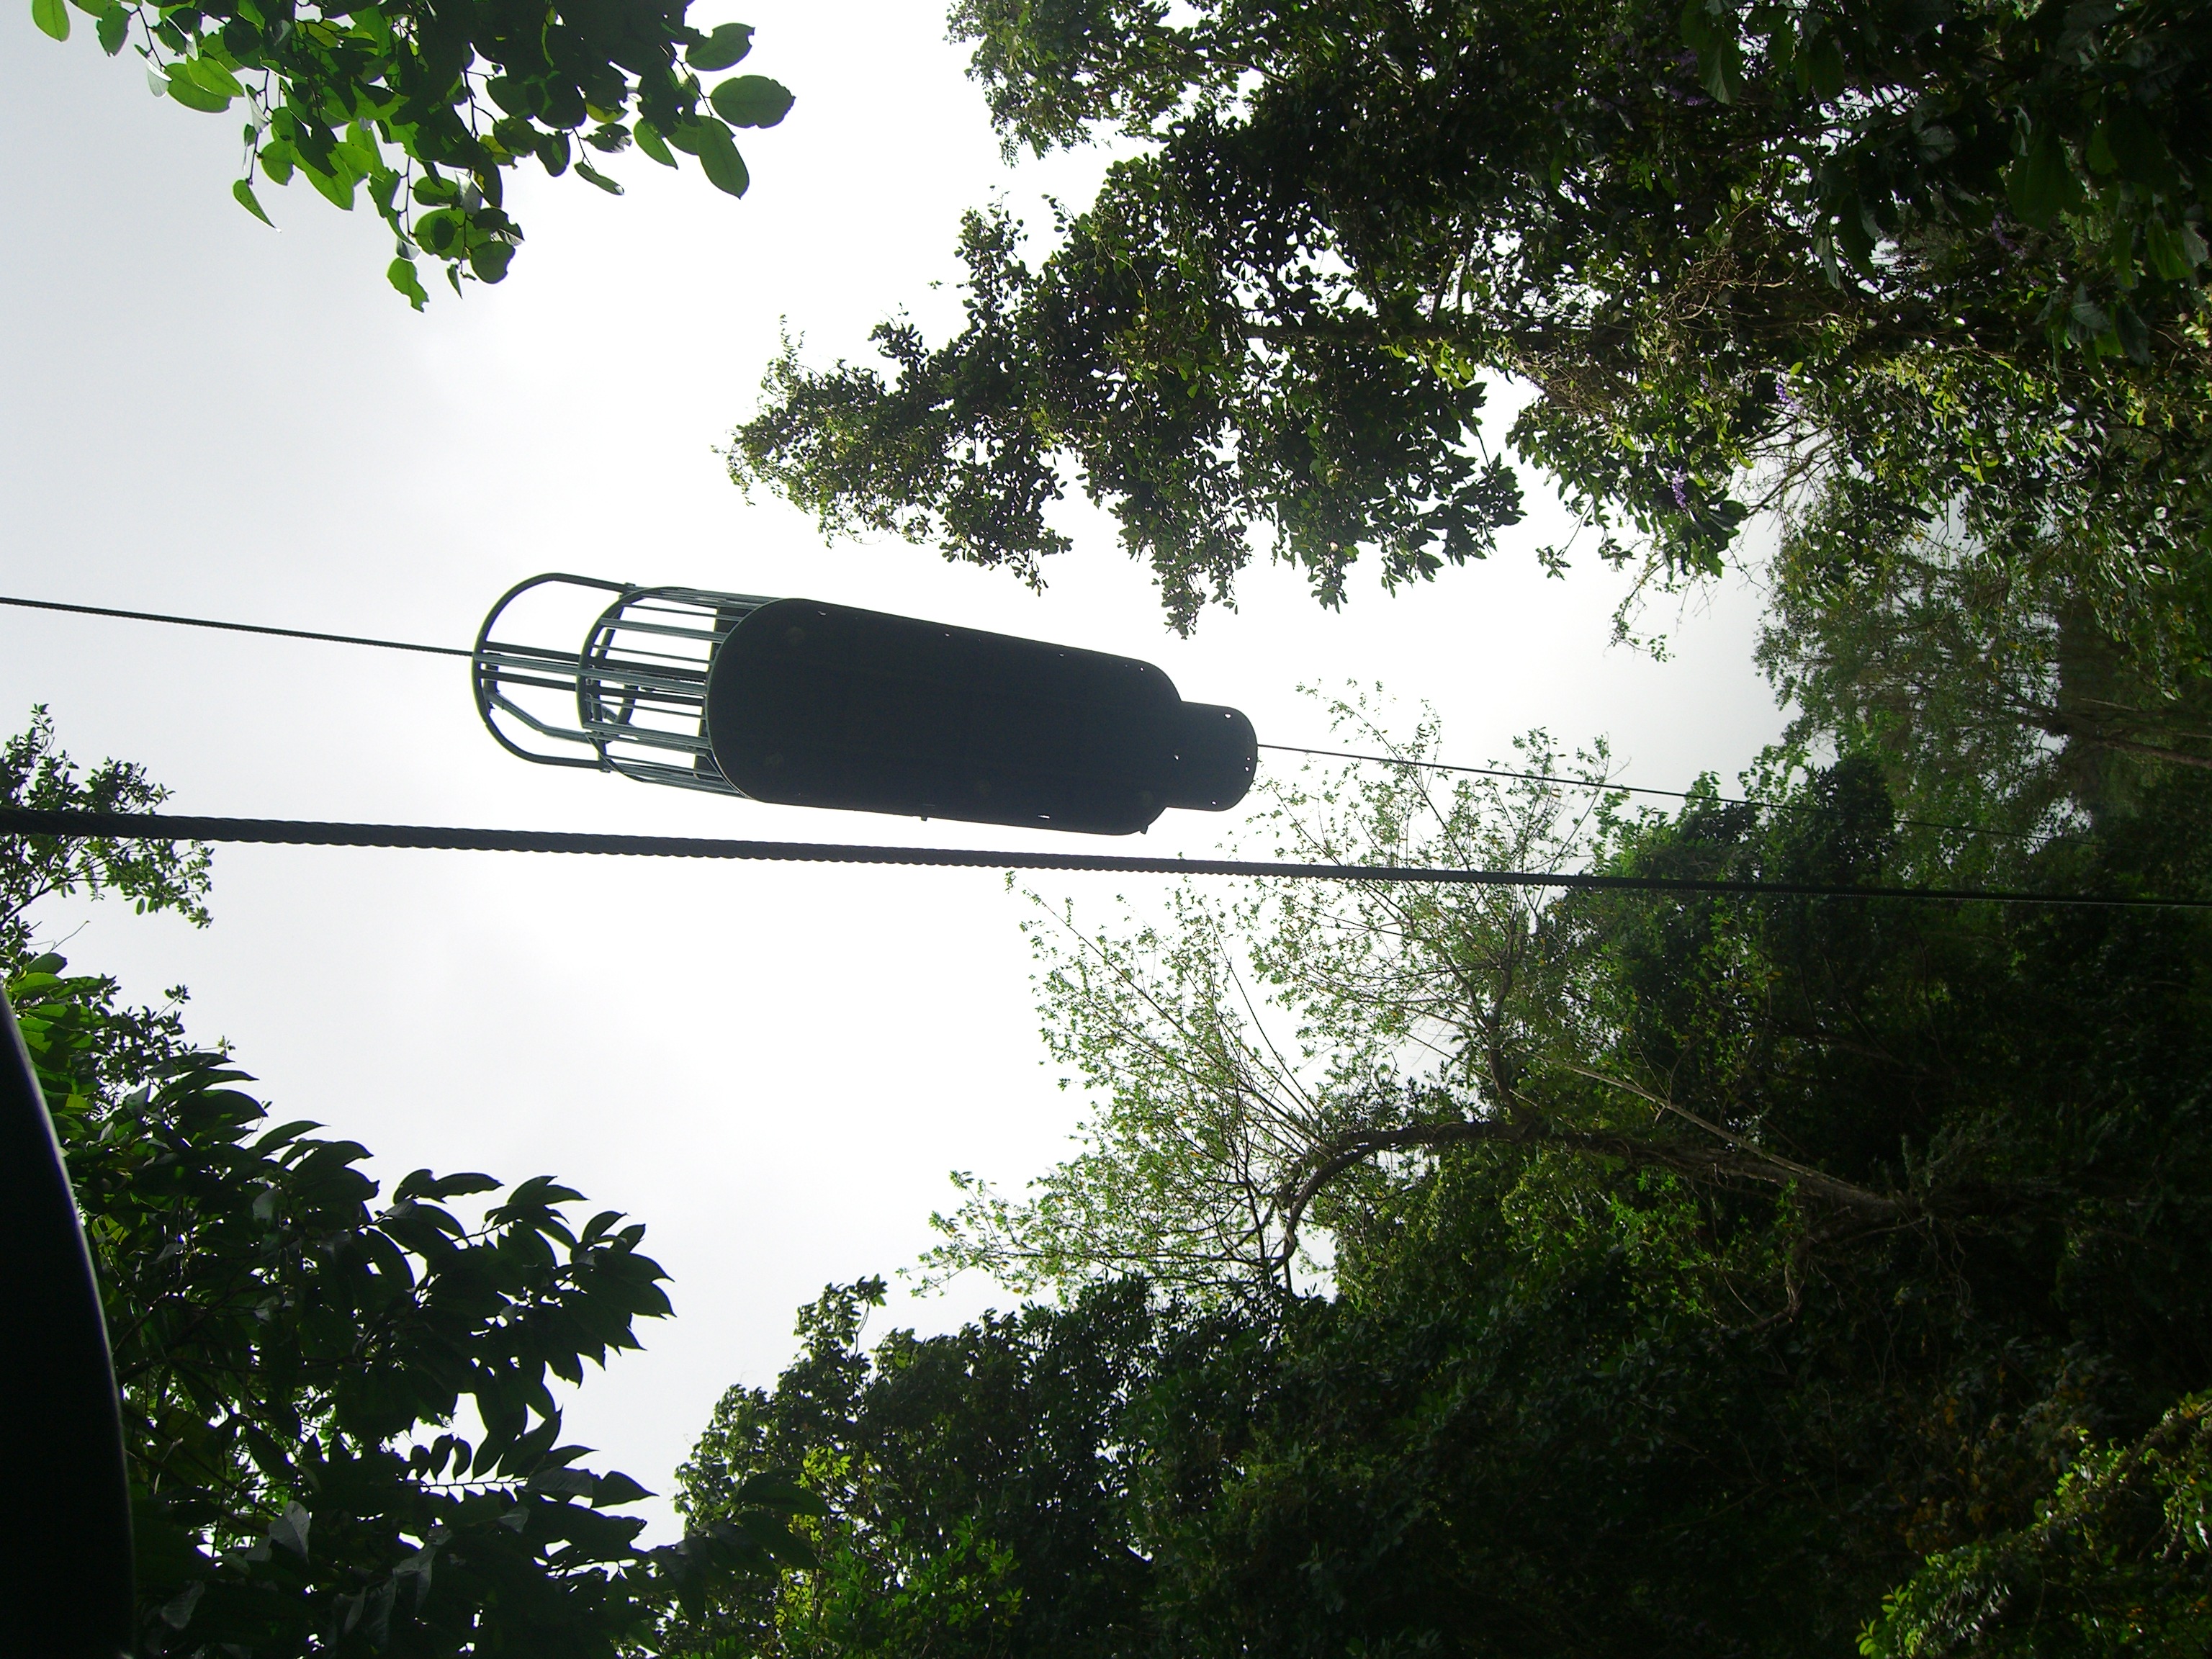 Gondola ride into rainforest, St Lucia